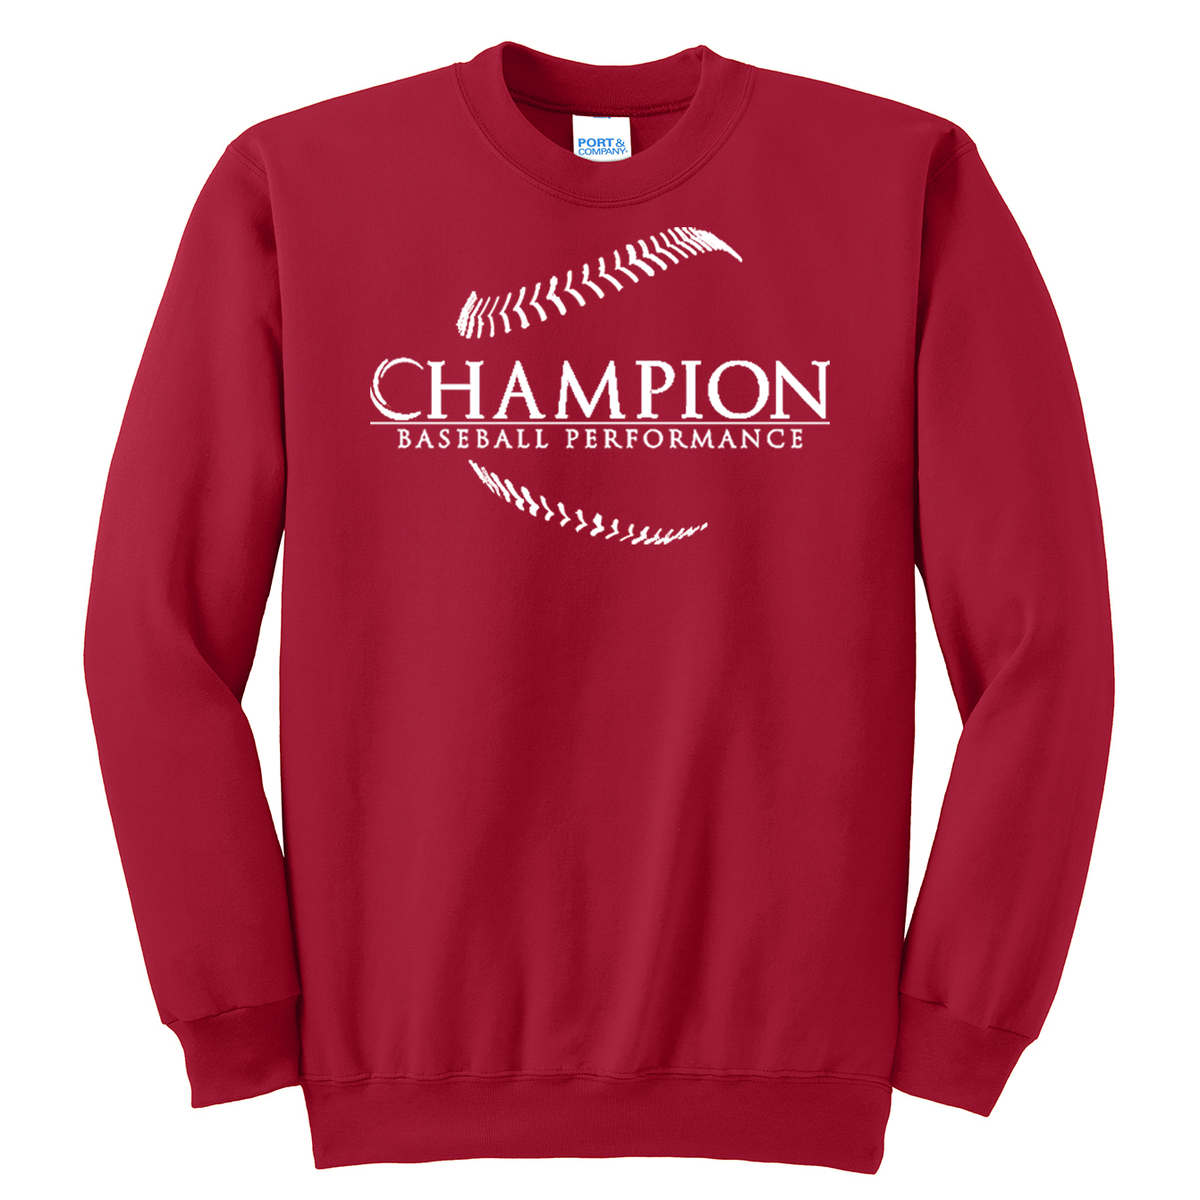 Champion Baseball Performance Crew Neck Sweater